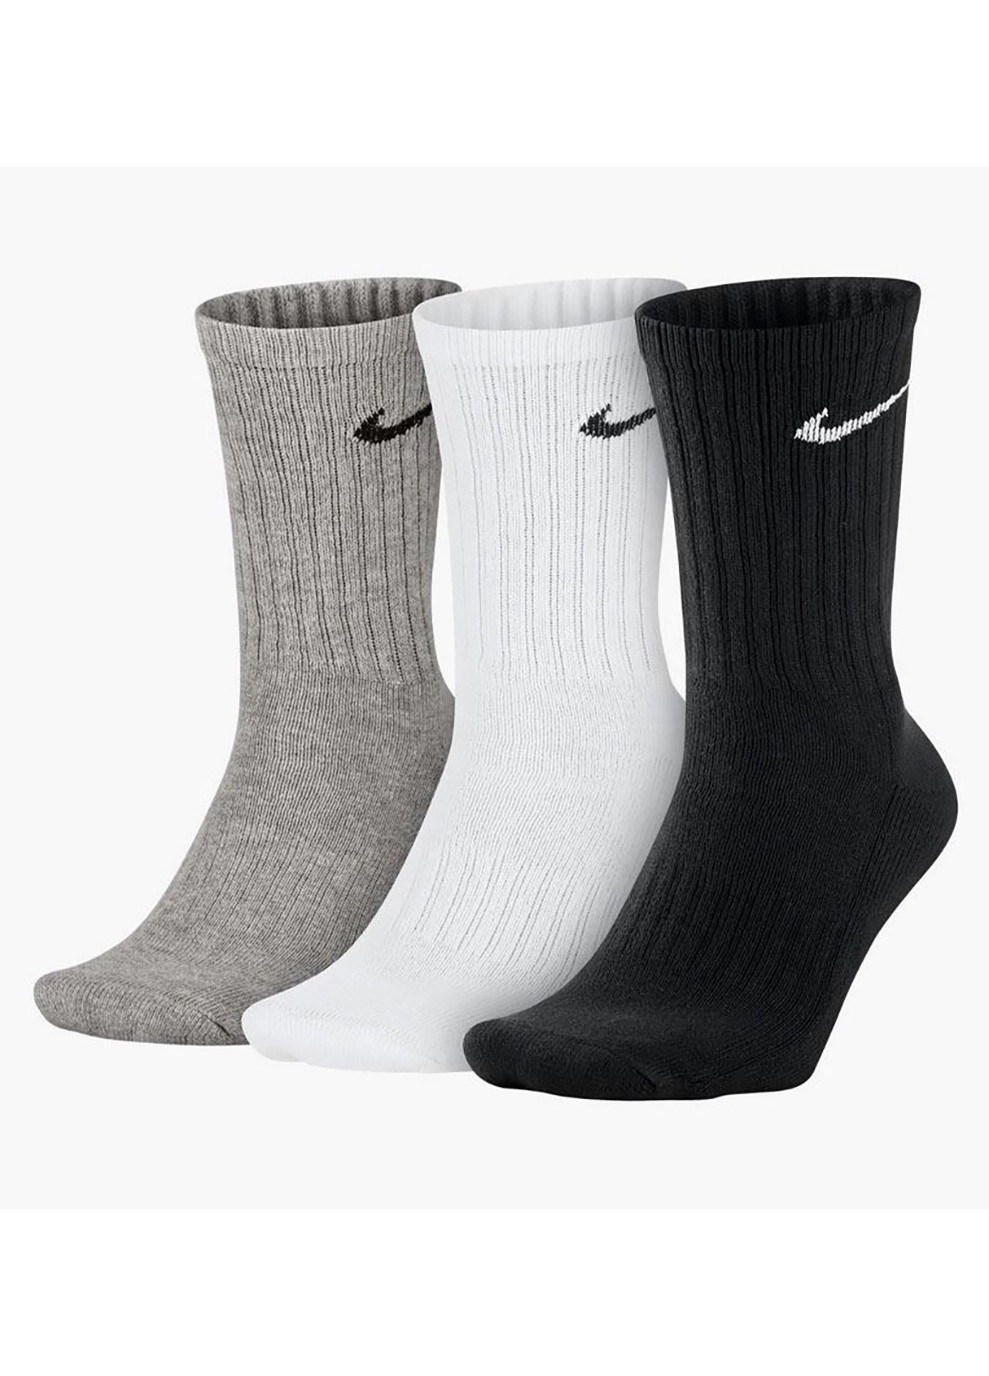 Носки 3-pack black/gray/white — SX4508-965 Nike (254342454)